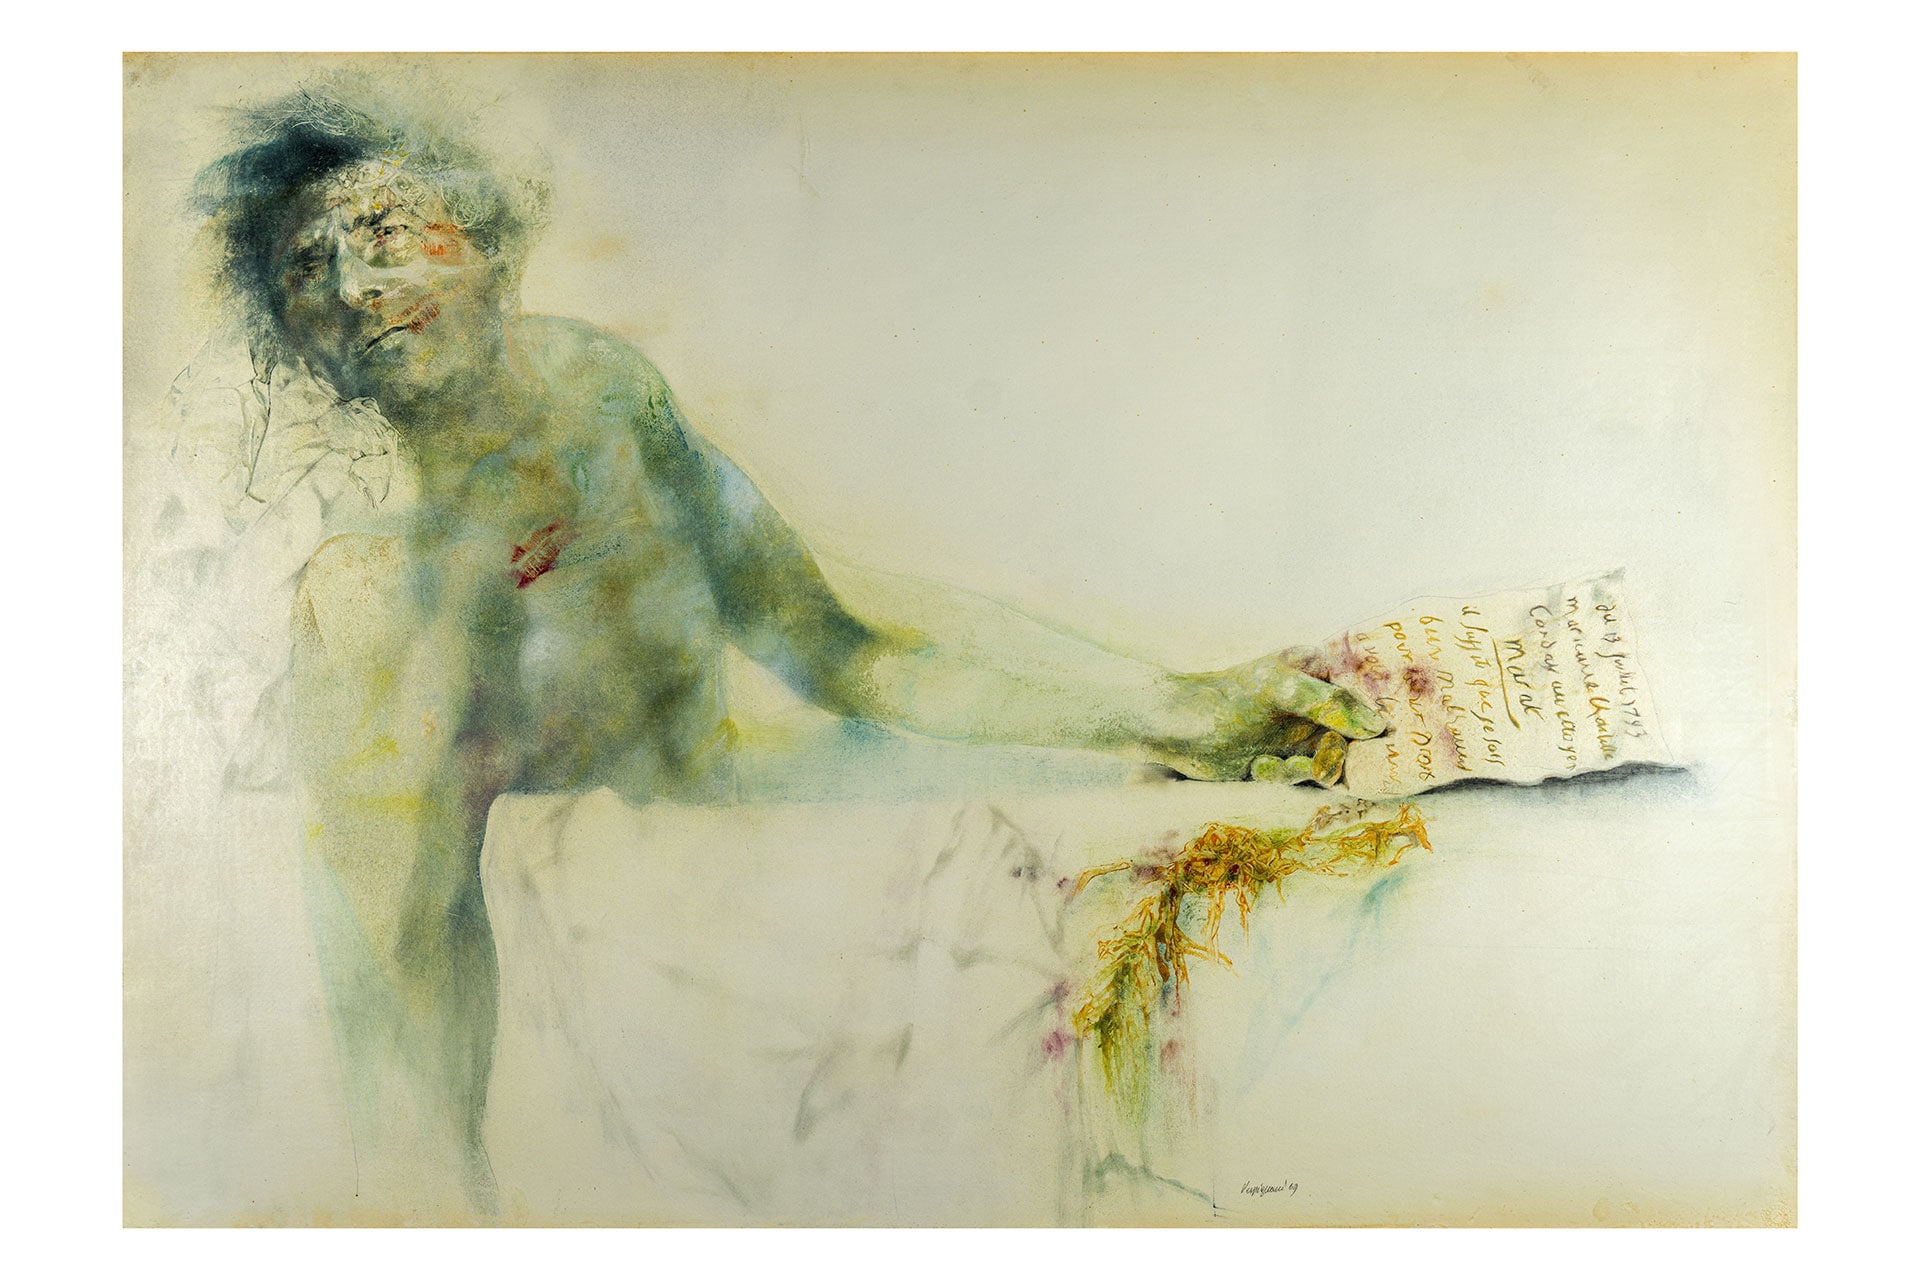 Lorenzo Vespignani "Come Marat", 1969. Olio su carta intelaiata, cm 73x103 